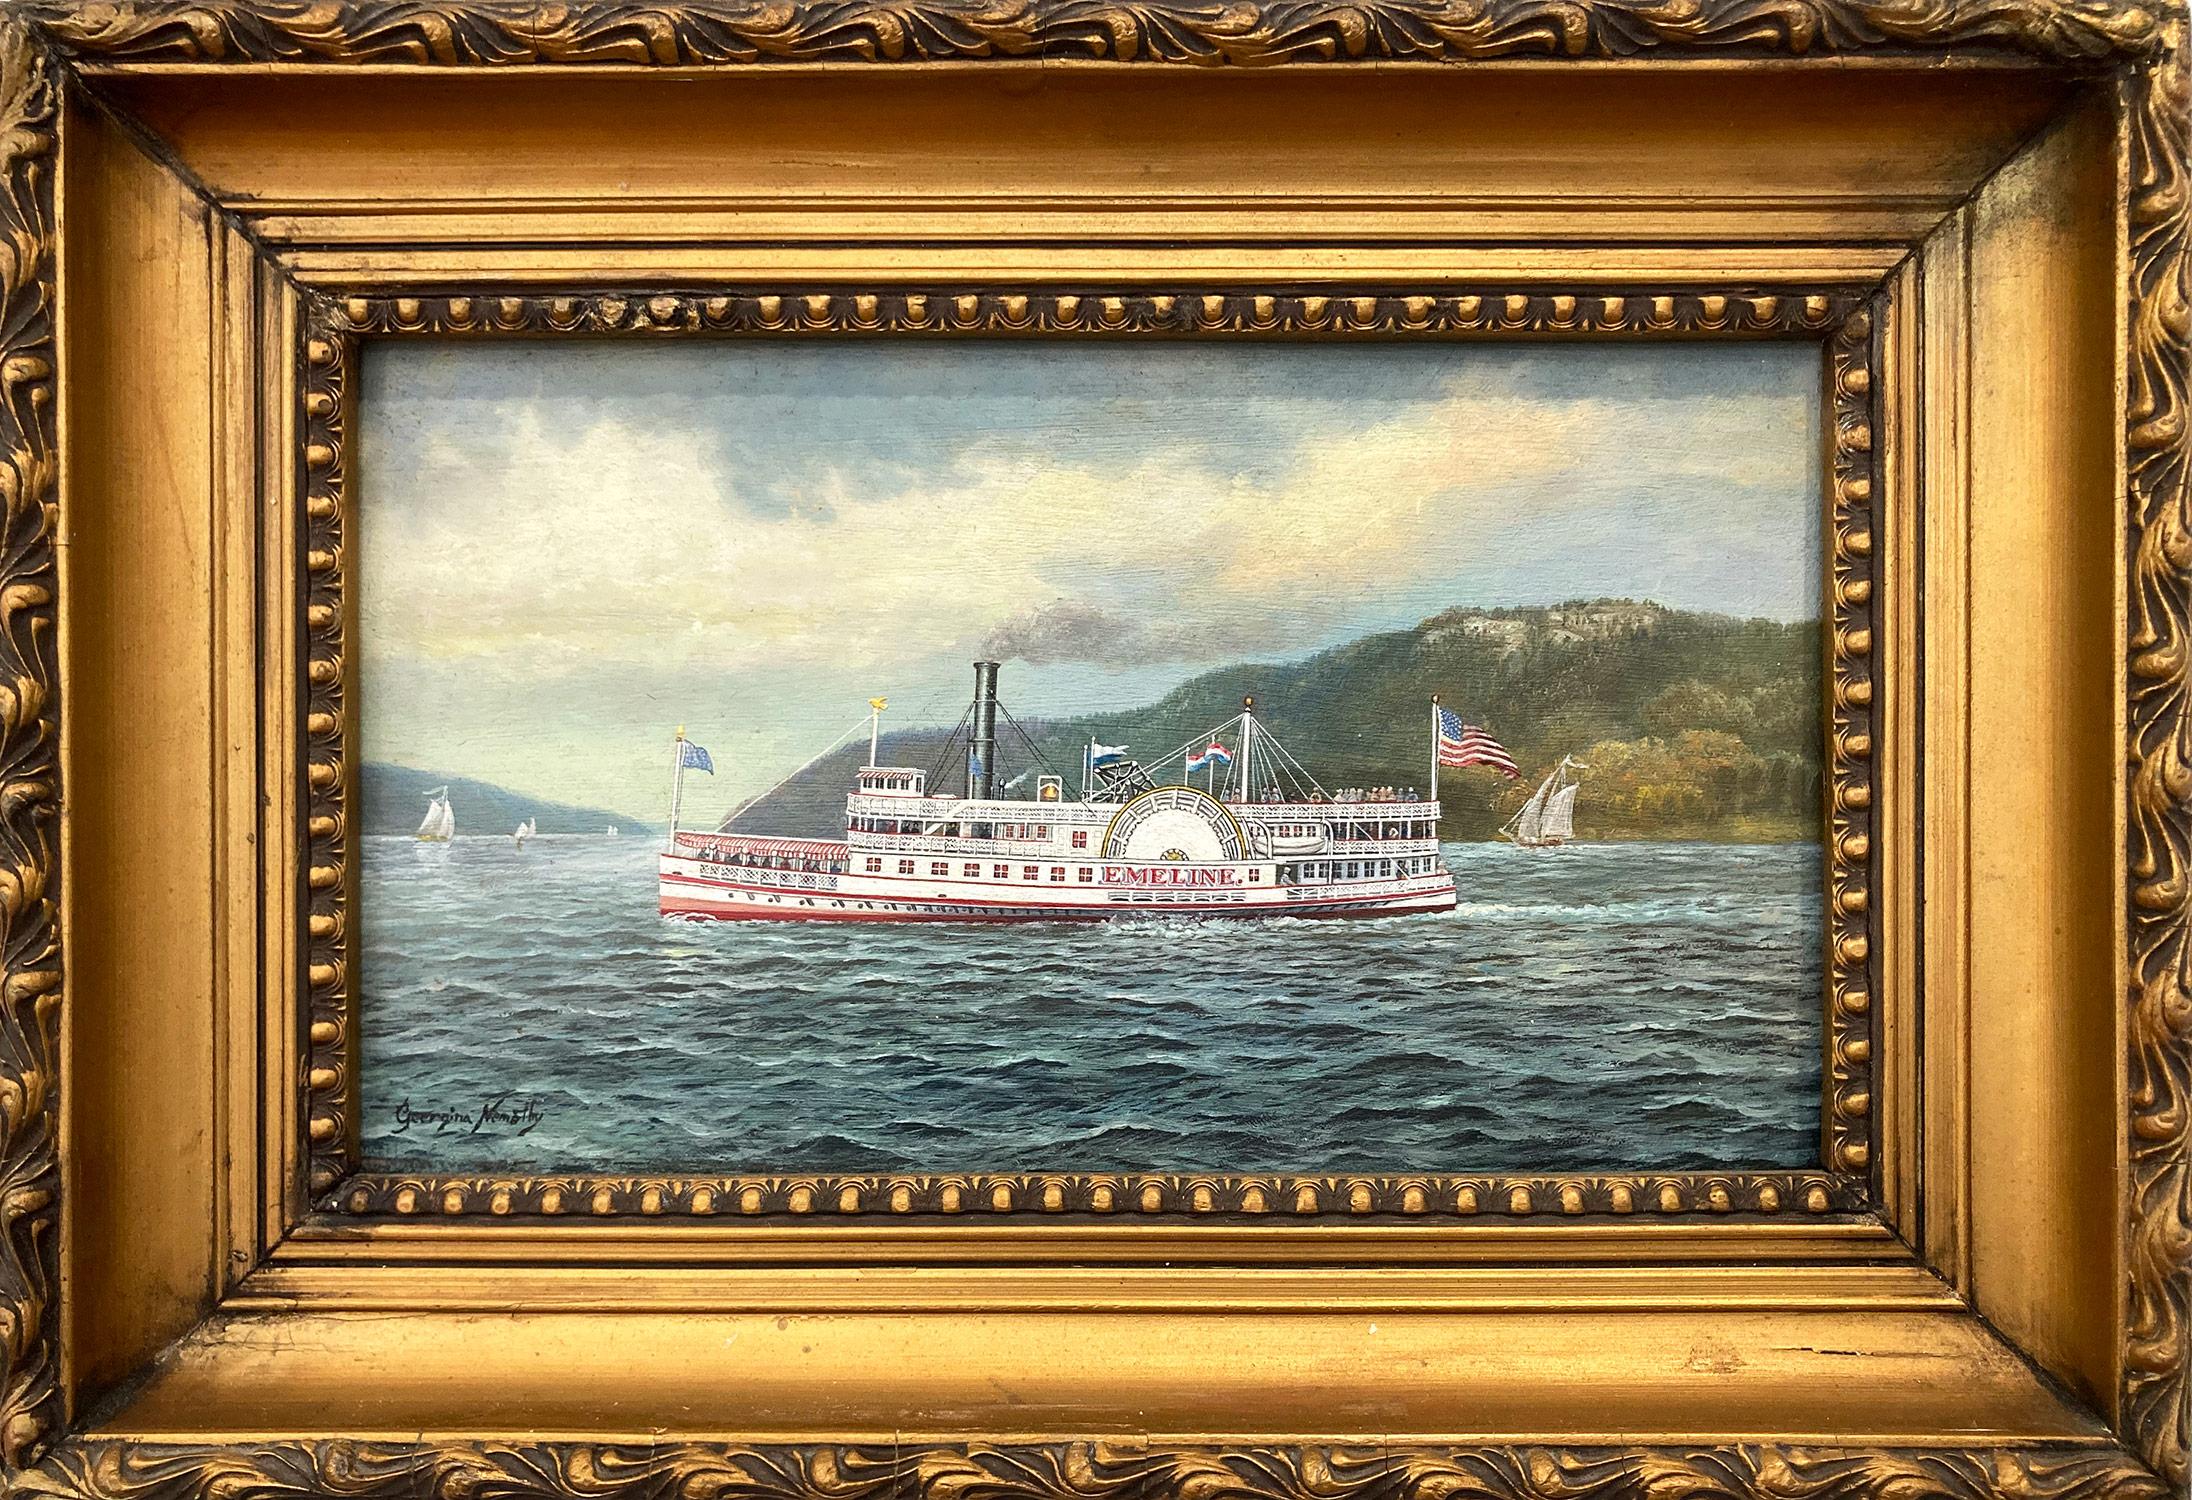 Georgina Nemethy Landscape Painting - "Emeline Steamer Ship" American Realist Oil Painting on Board Miniature Details